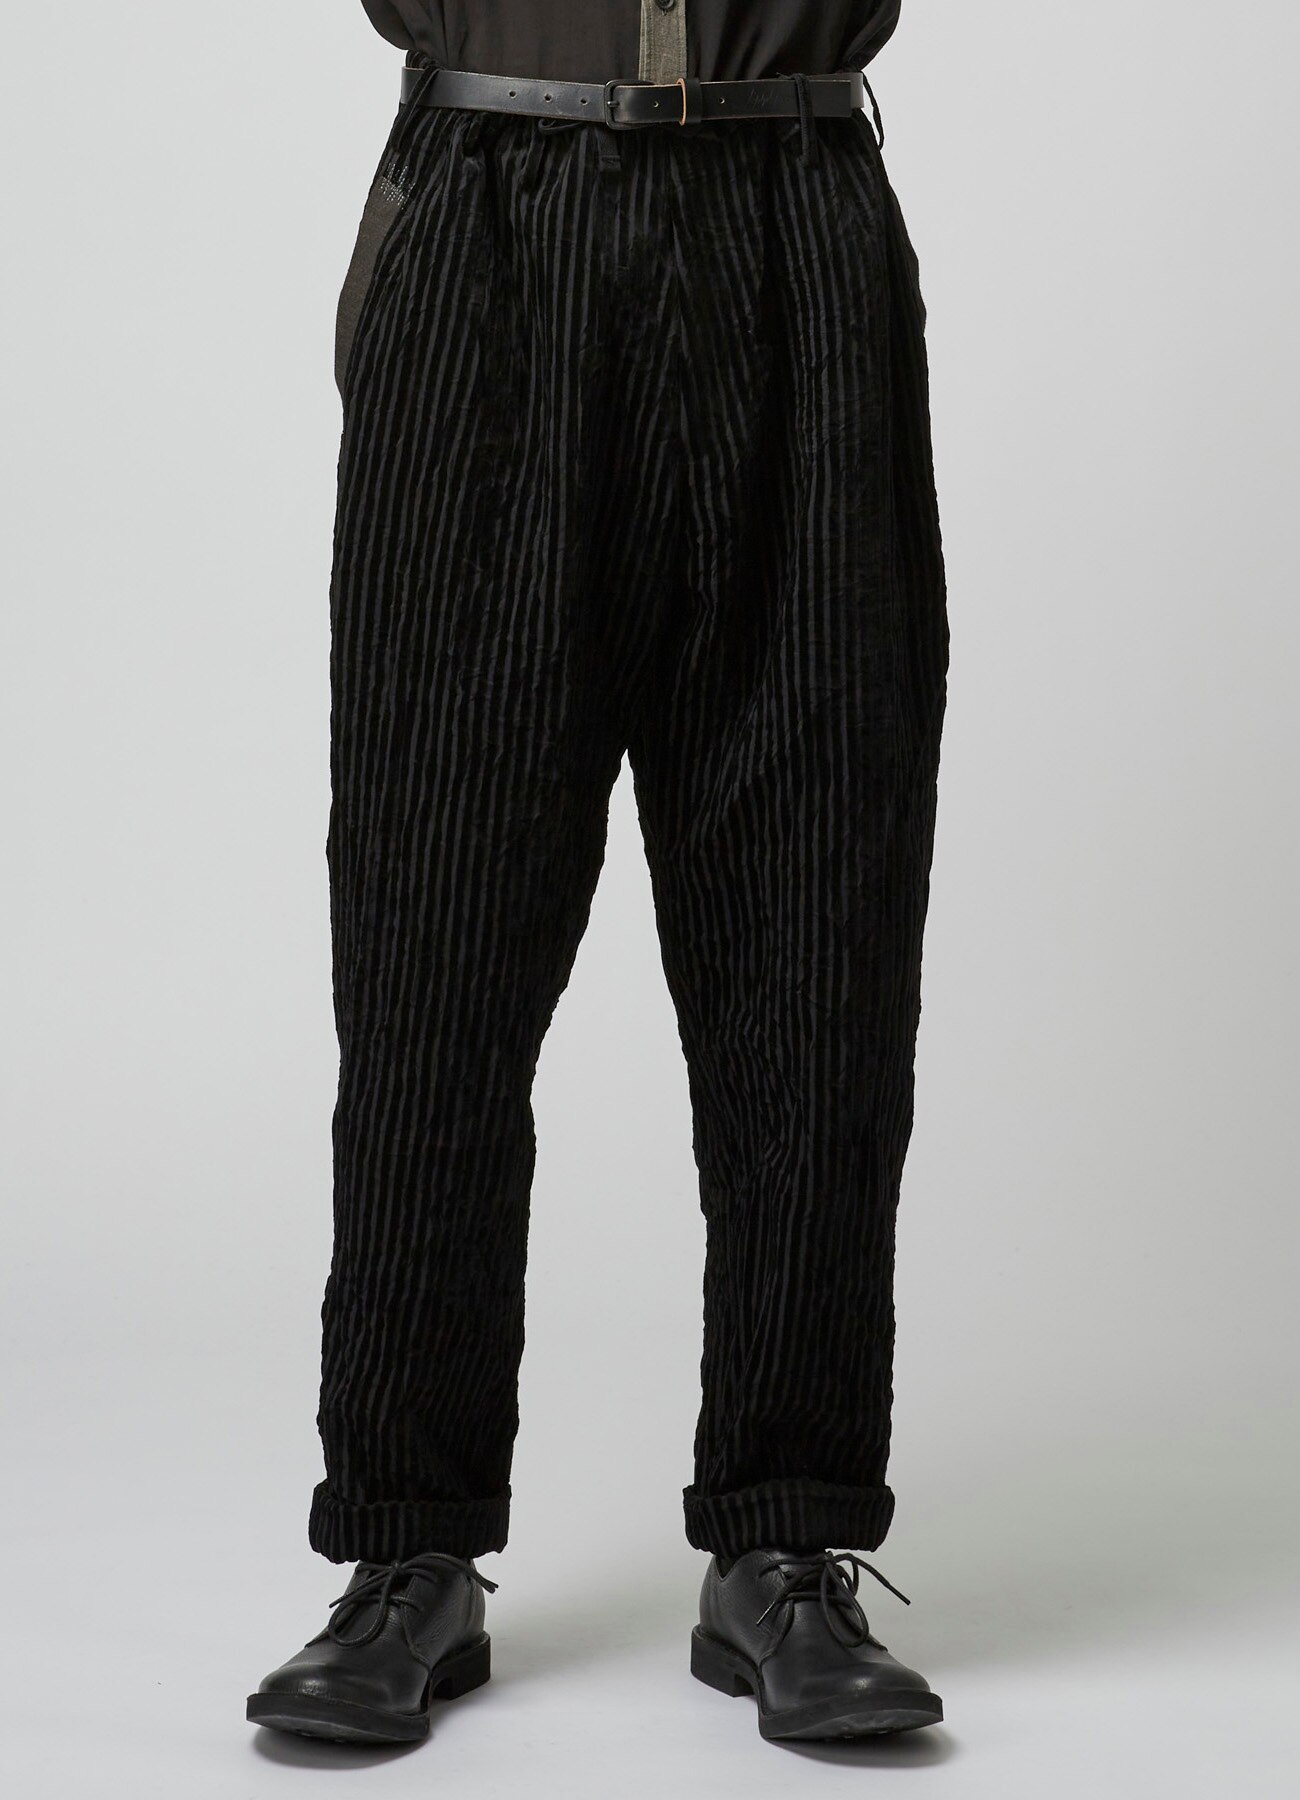 Black Striped Pant For Women - 109F.com